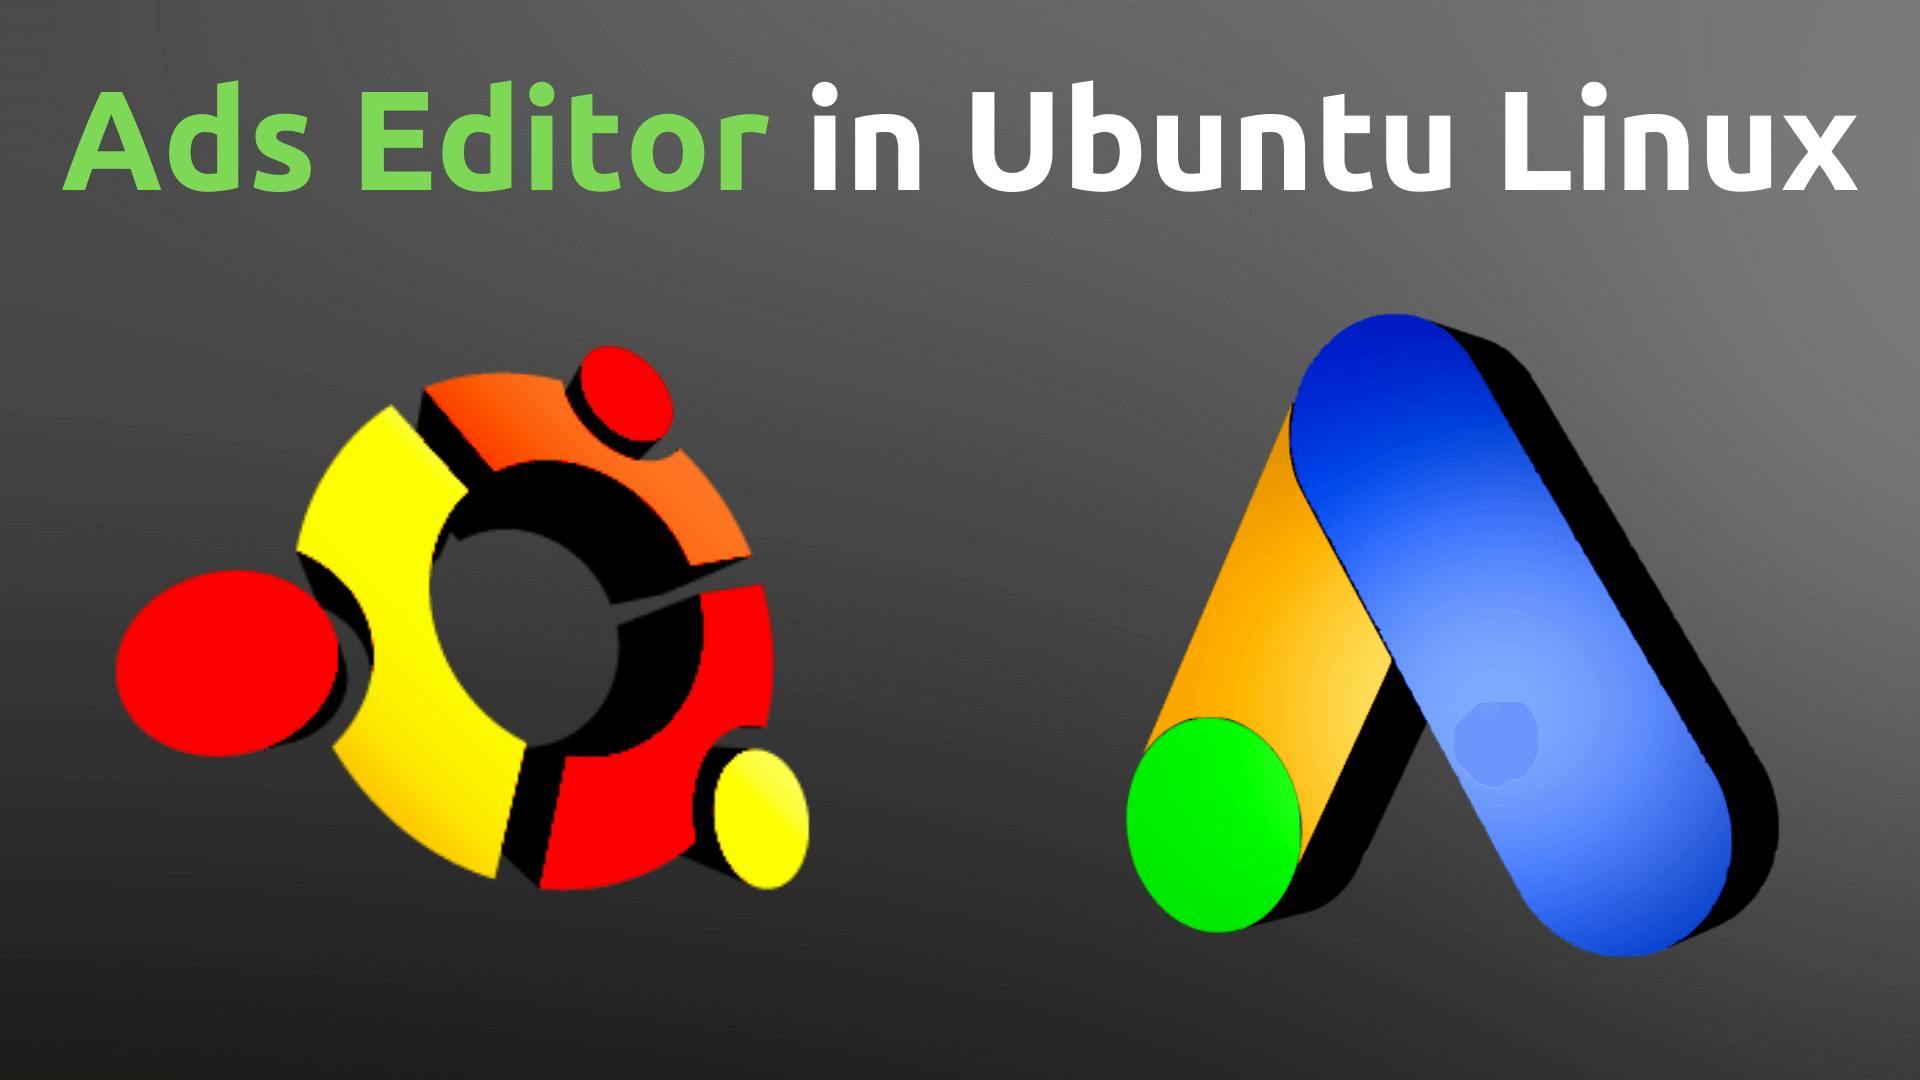 adwords editor on ubuntu linux